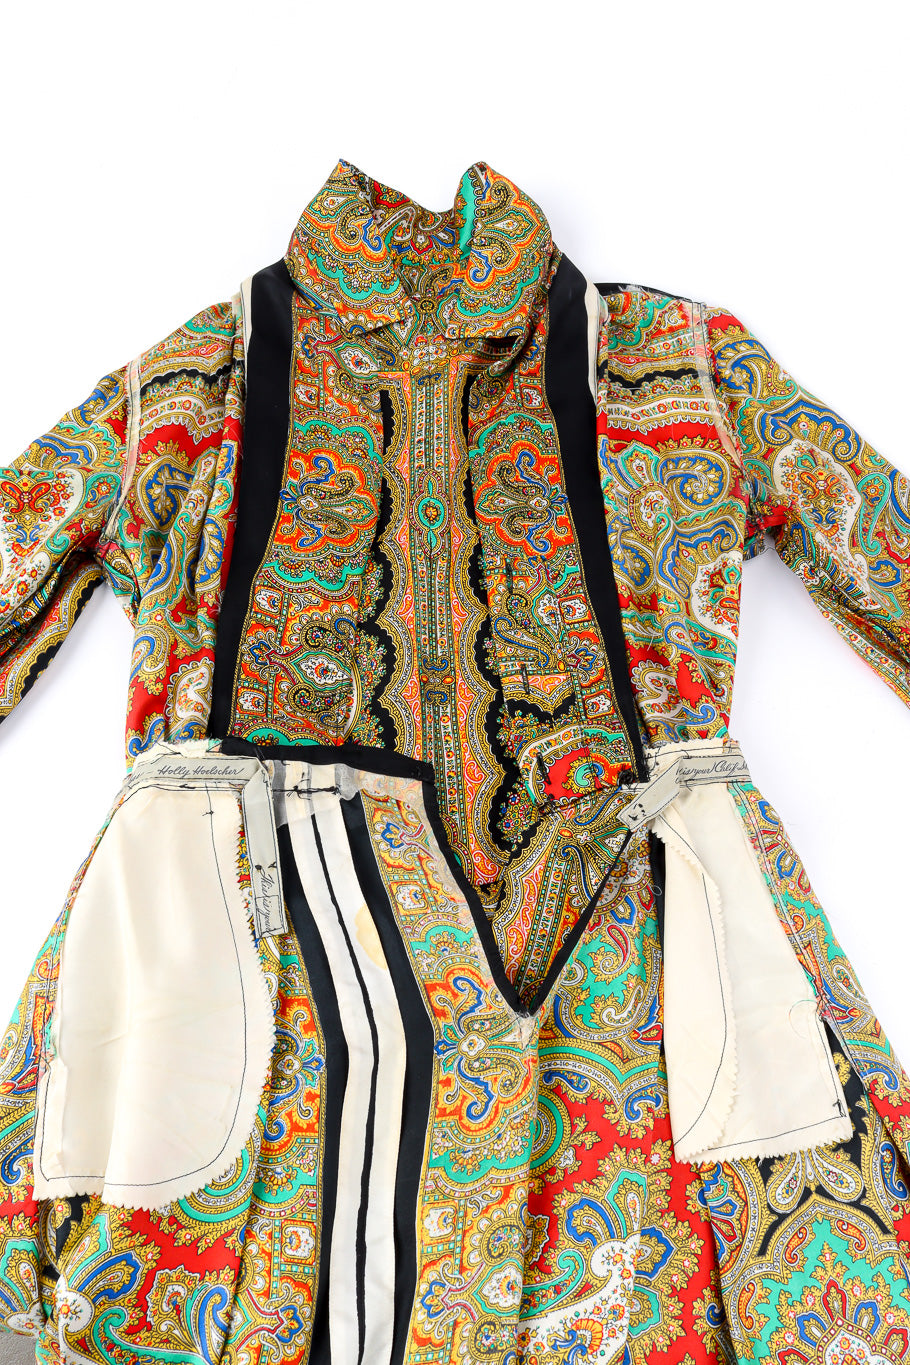 Vintage Holly Hoelscher Silk Paisley Shirt Dress inside out @Recessla